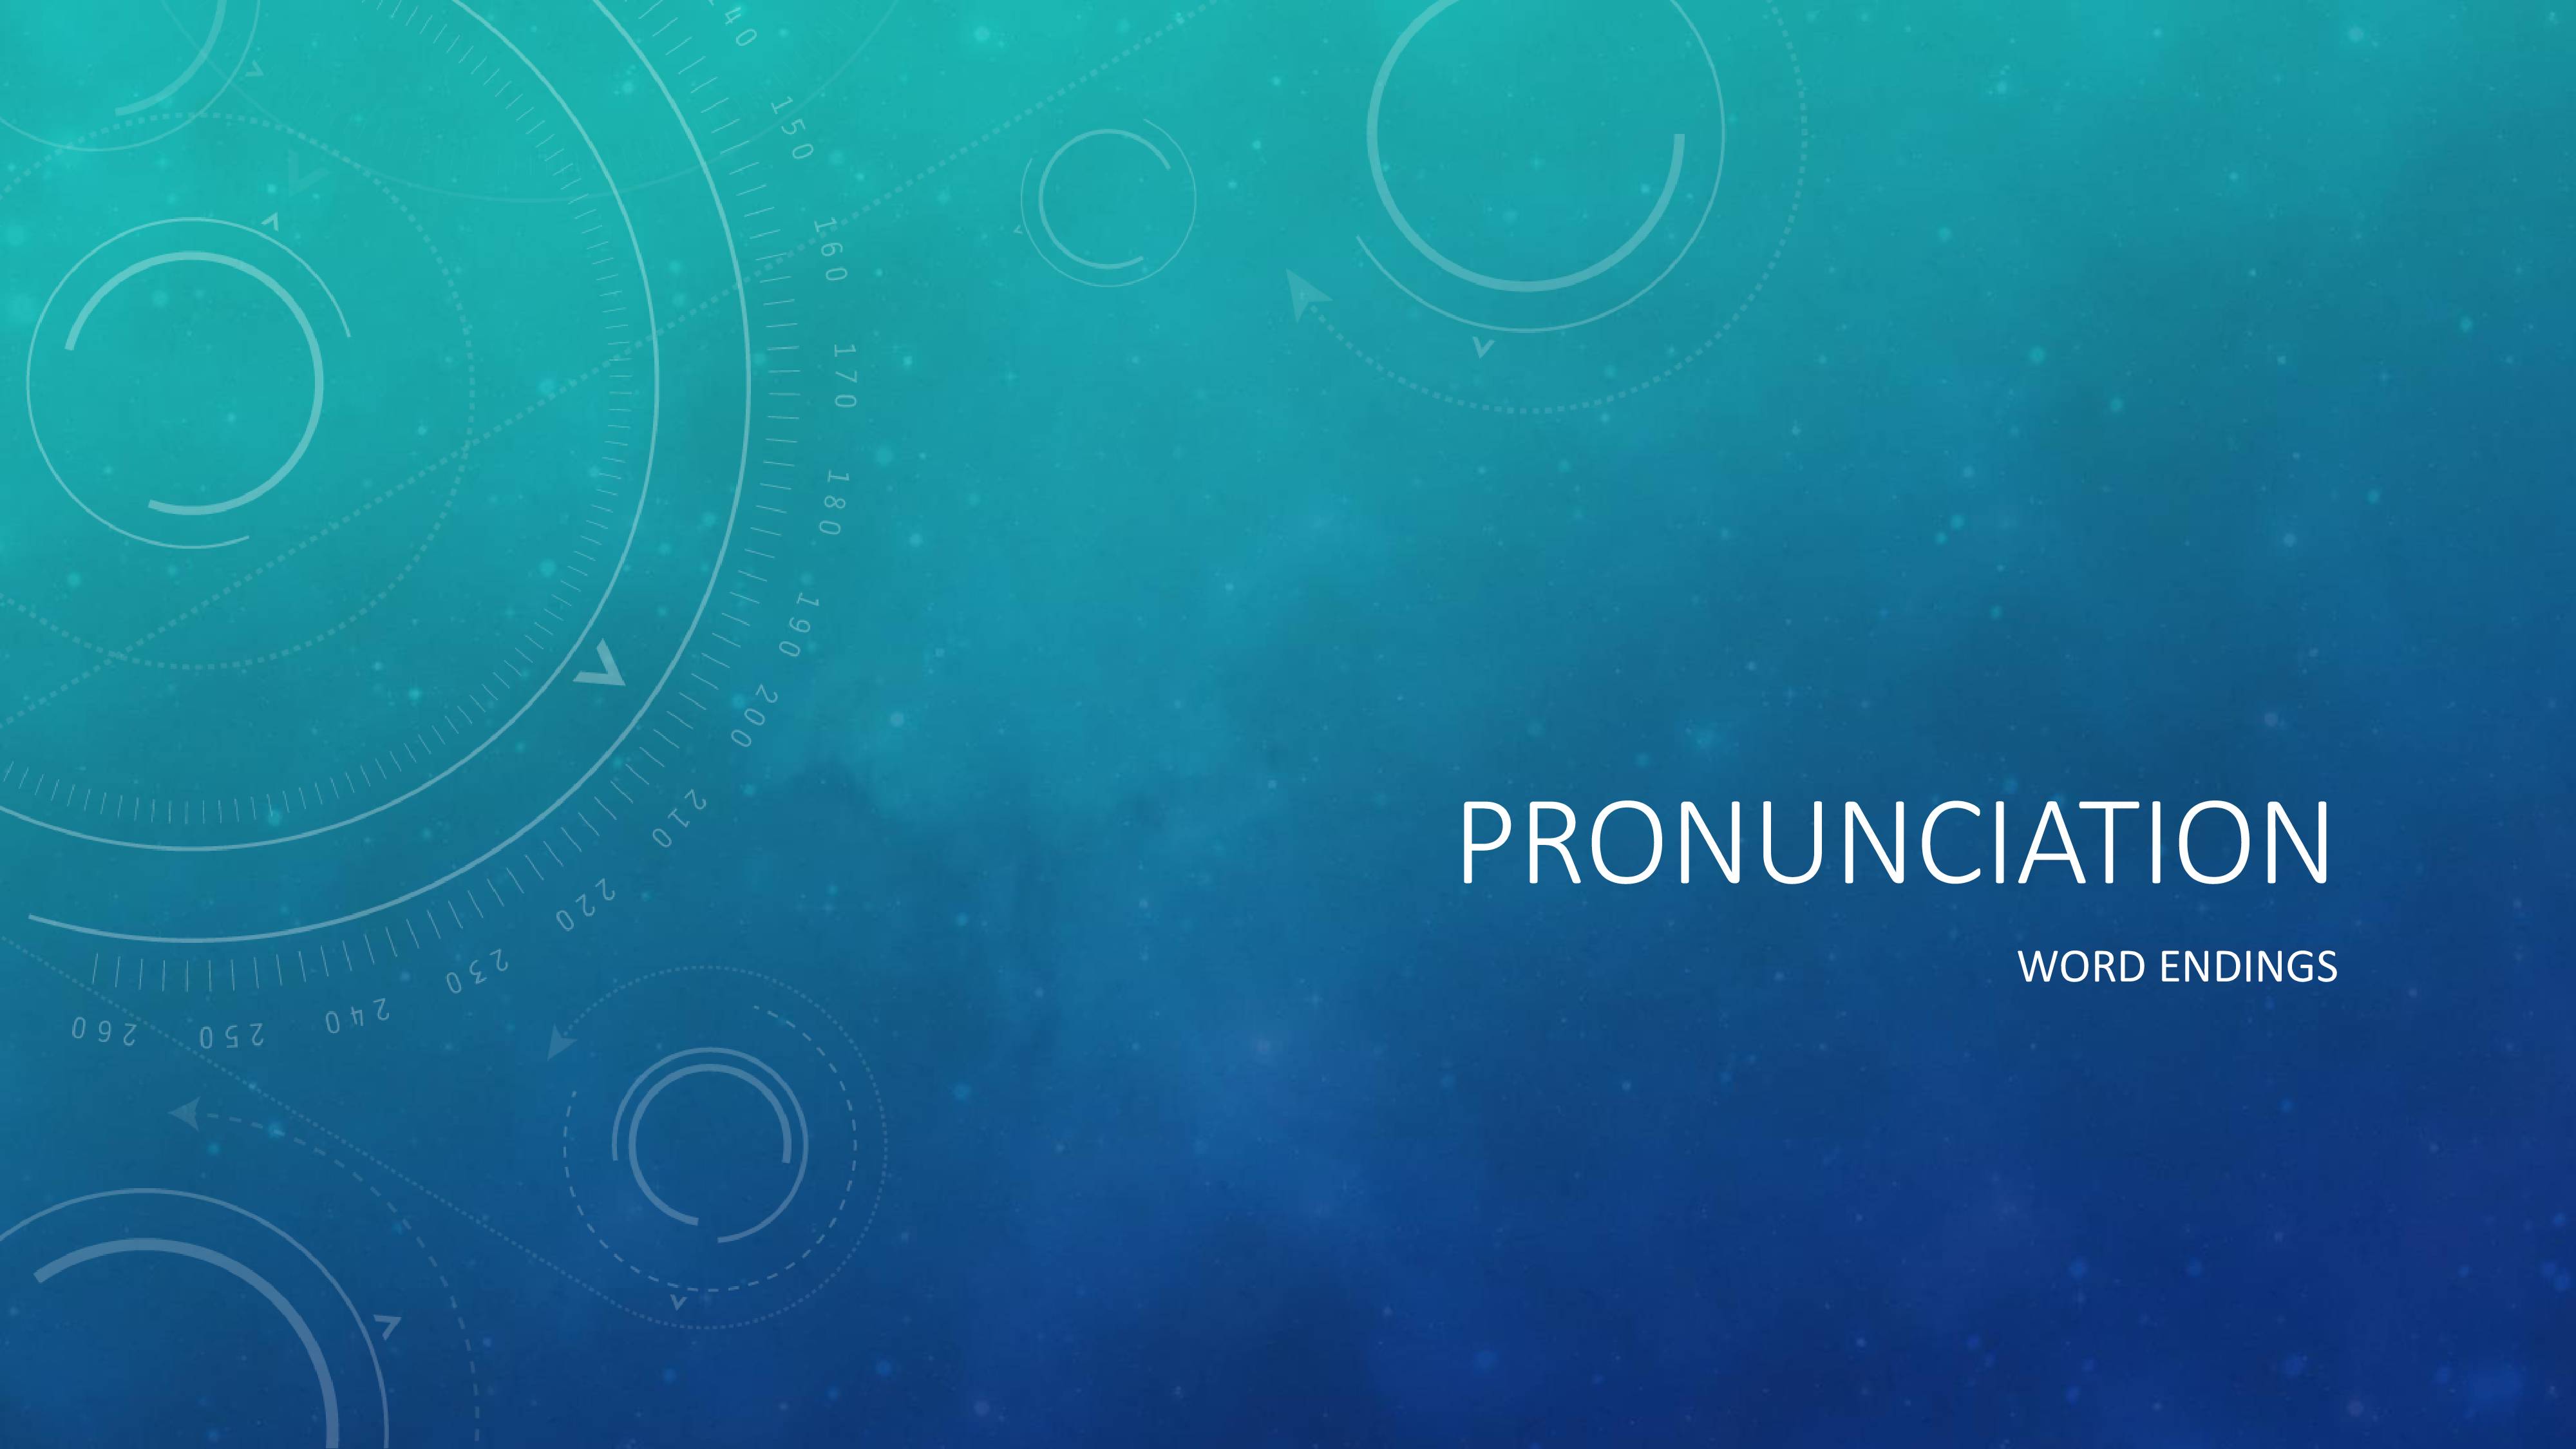 PPT on Pronounciation